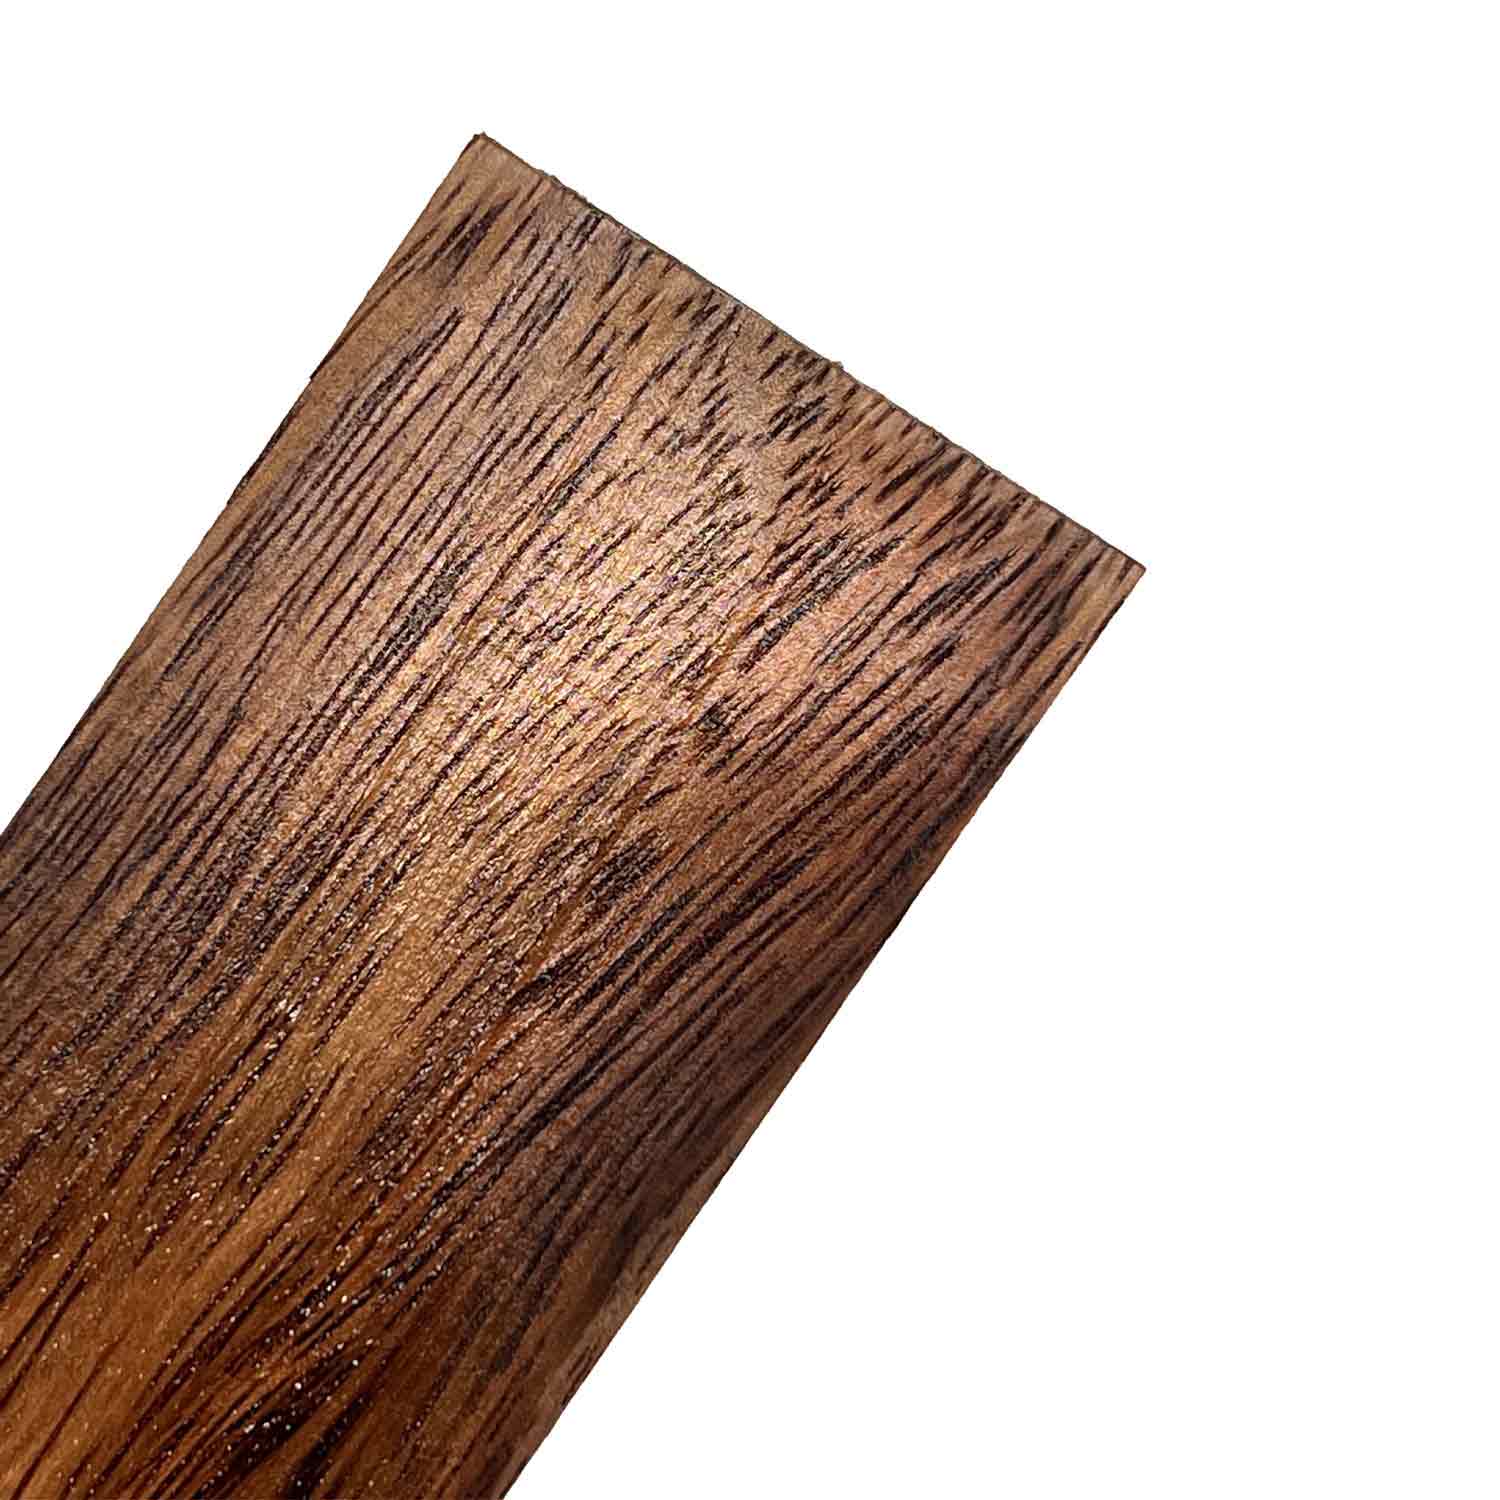 Bhilwara Thin Stock Lumber Boards Wood Crafts - Exotic Wood Zone - Buy online Across USA 